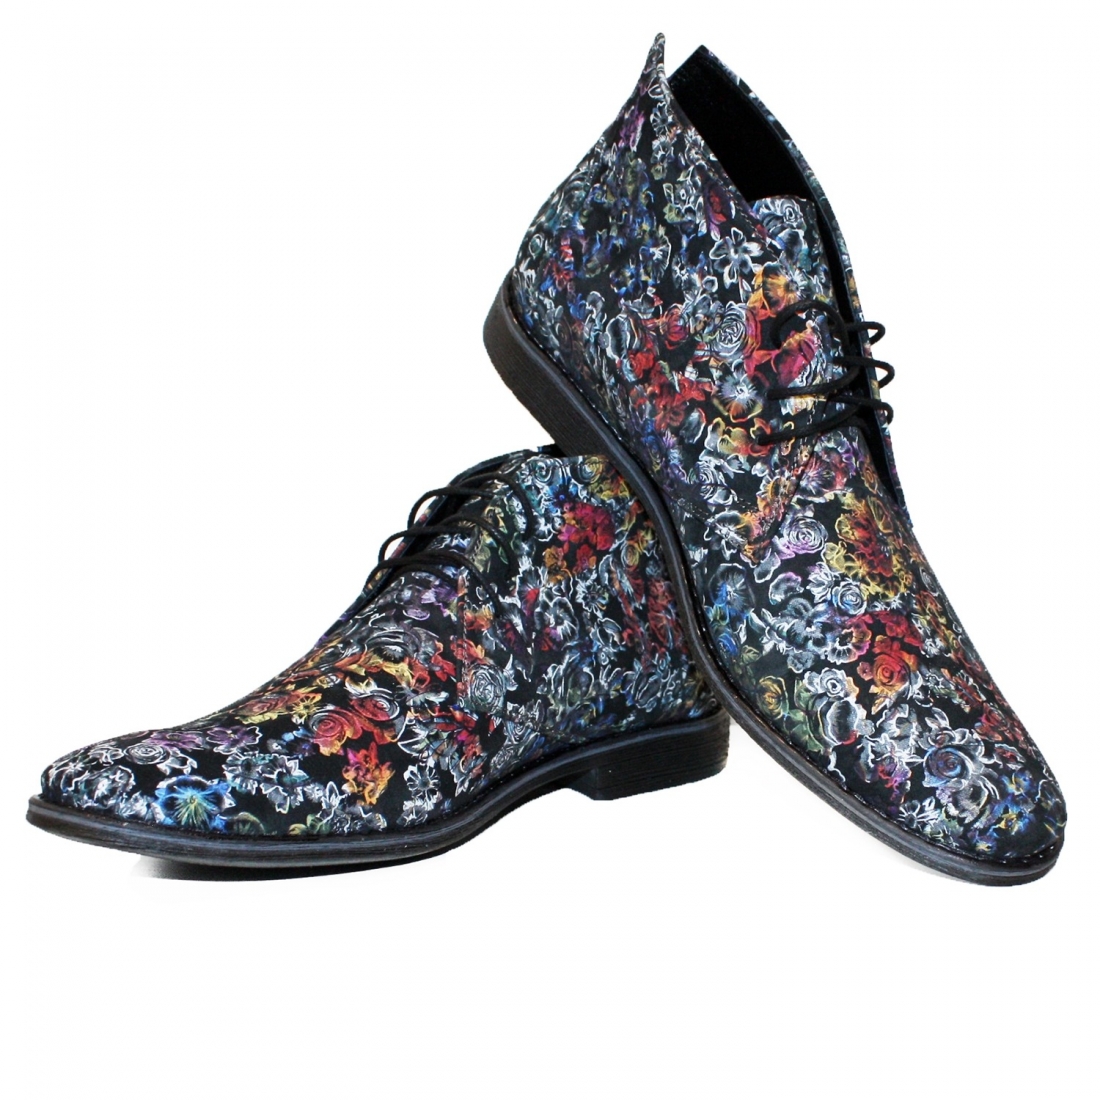 Modello Puciorro - Chukka Boots - Handmade Colorful Italian Leather Shoes